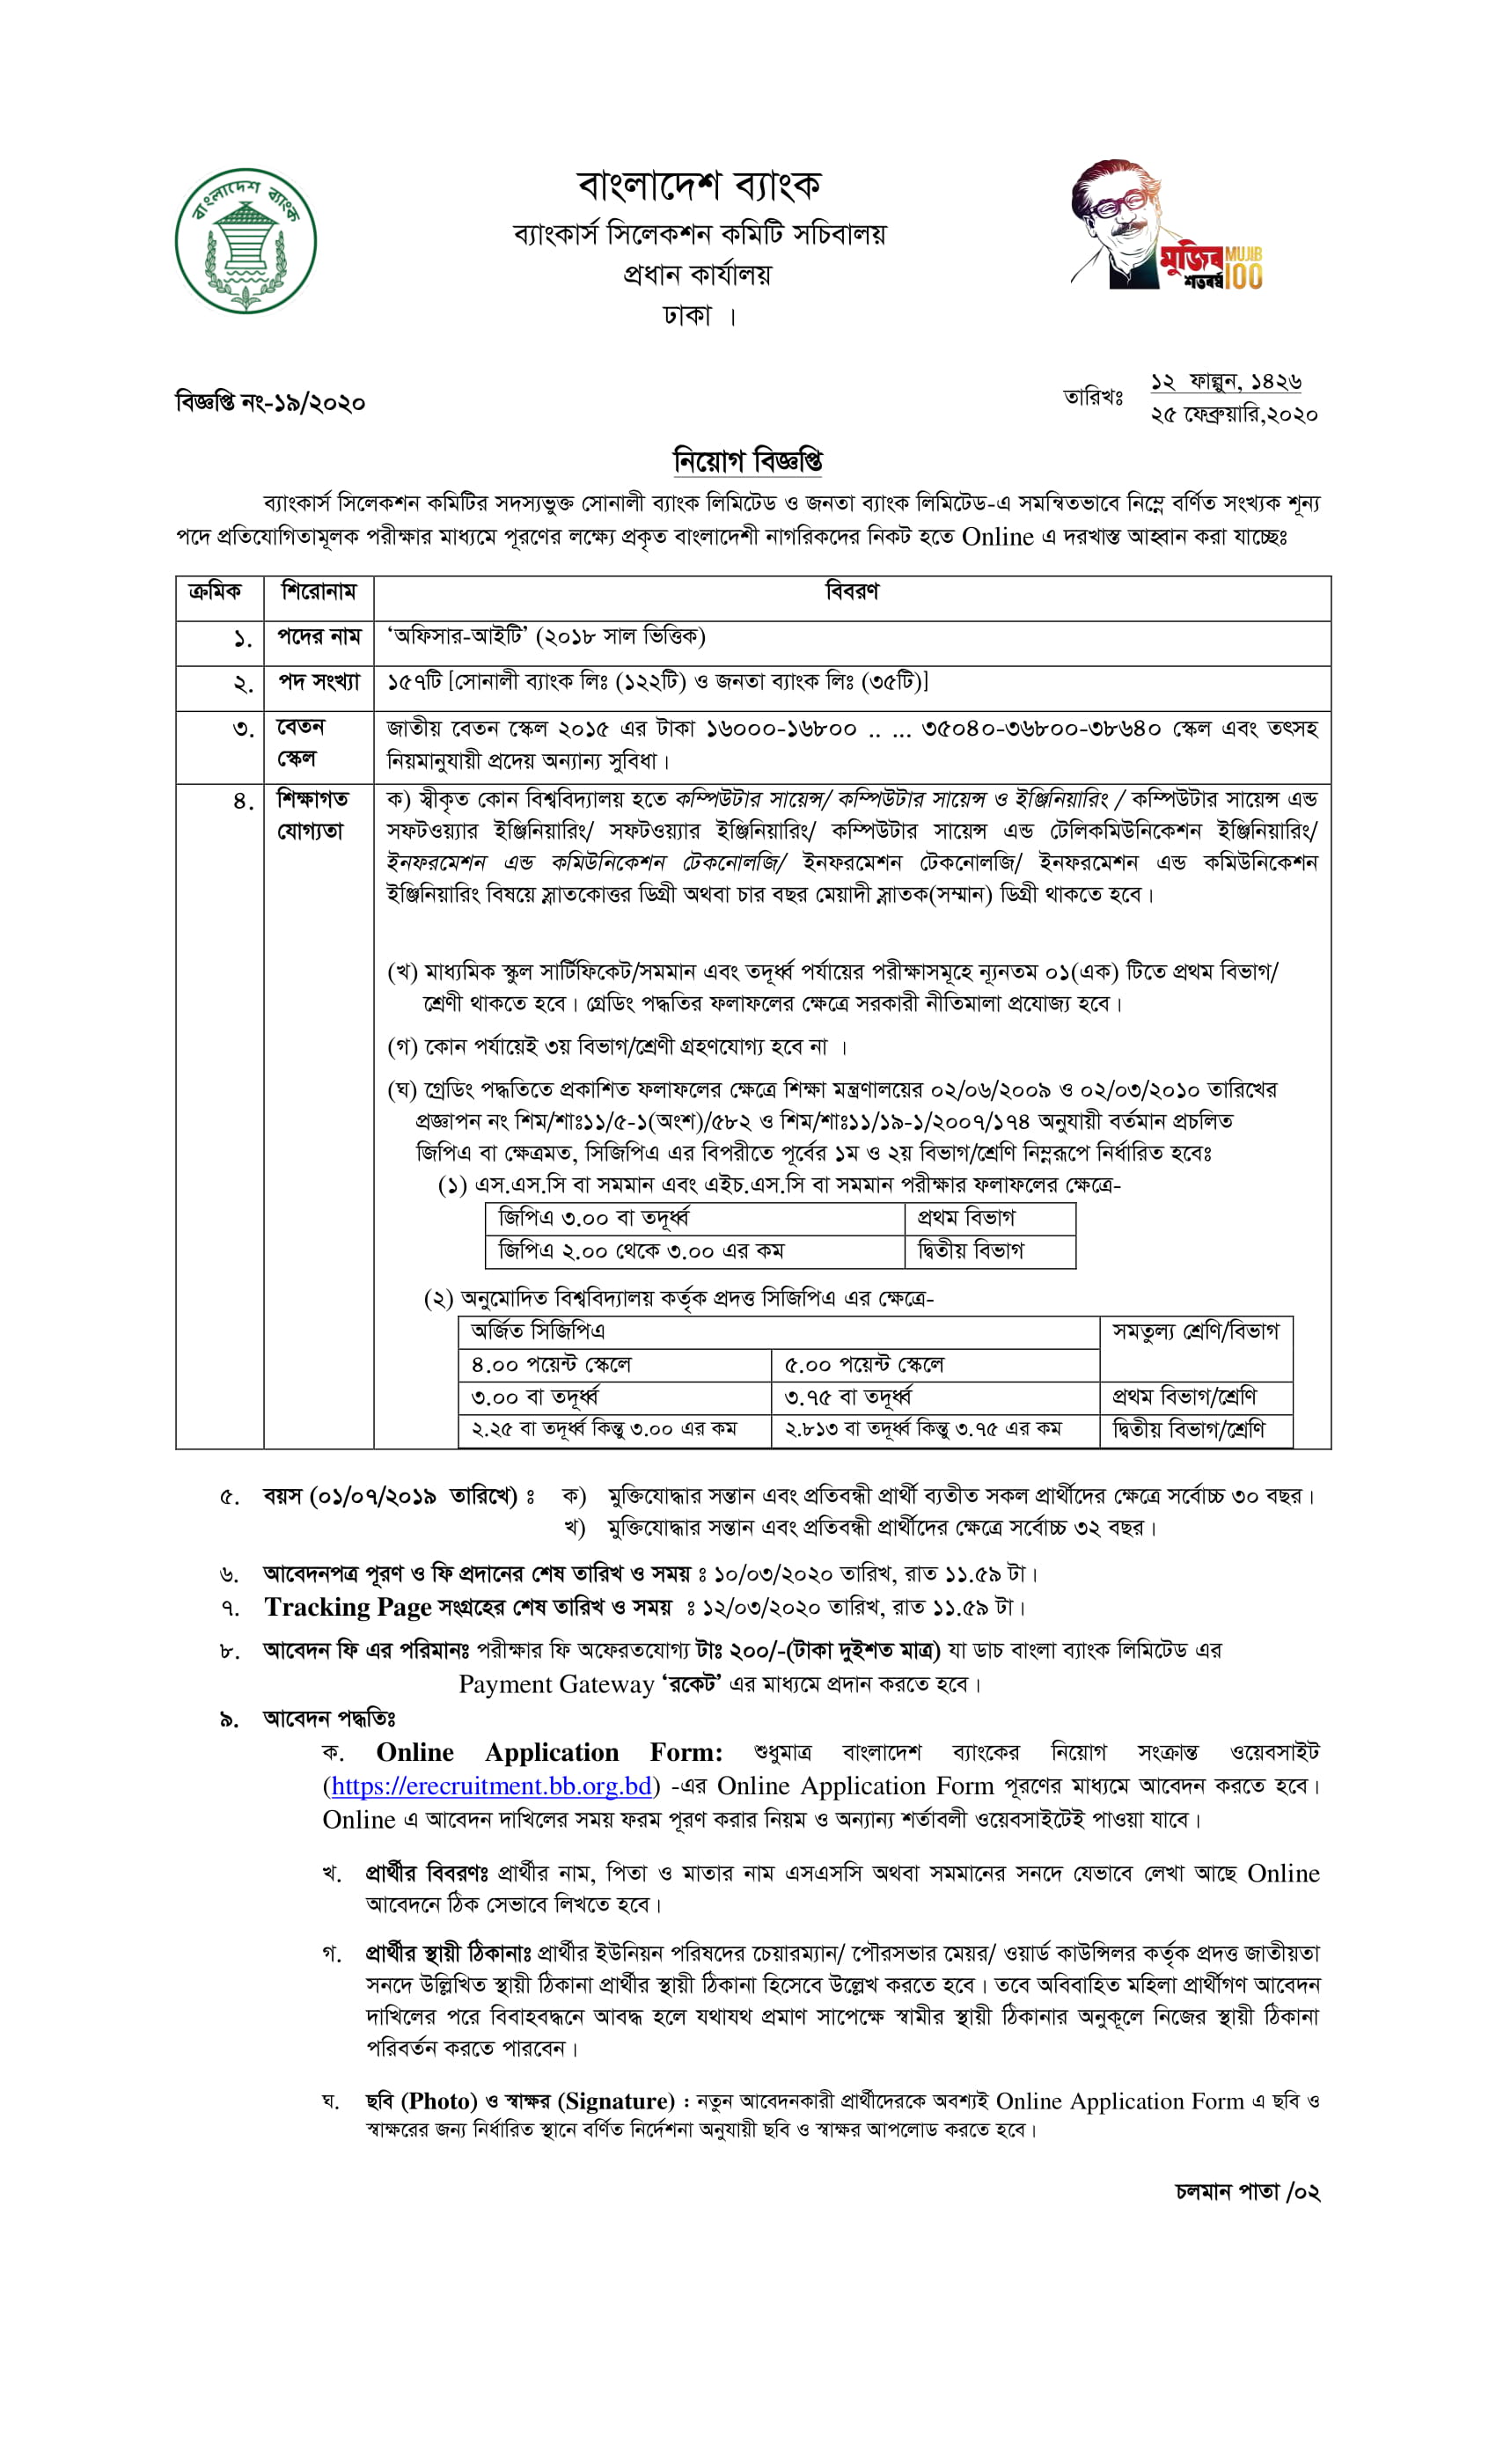 Sonali Bank & Janata Bank Ltd Job Circular 2020